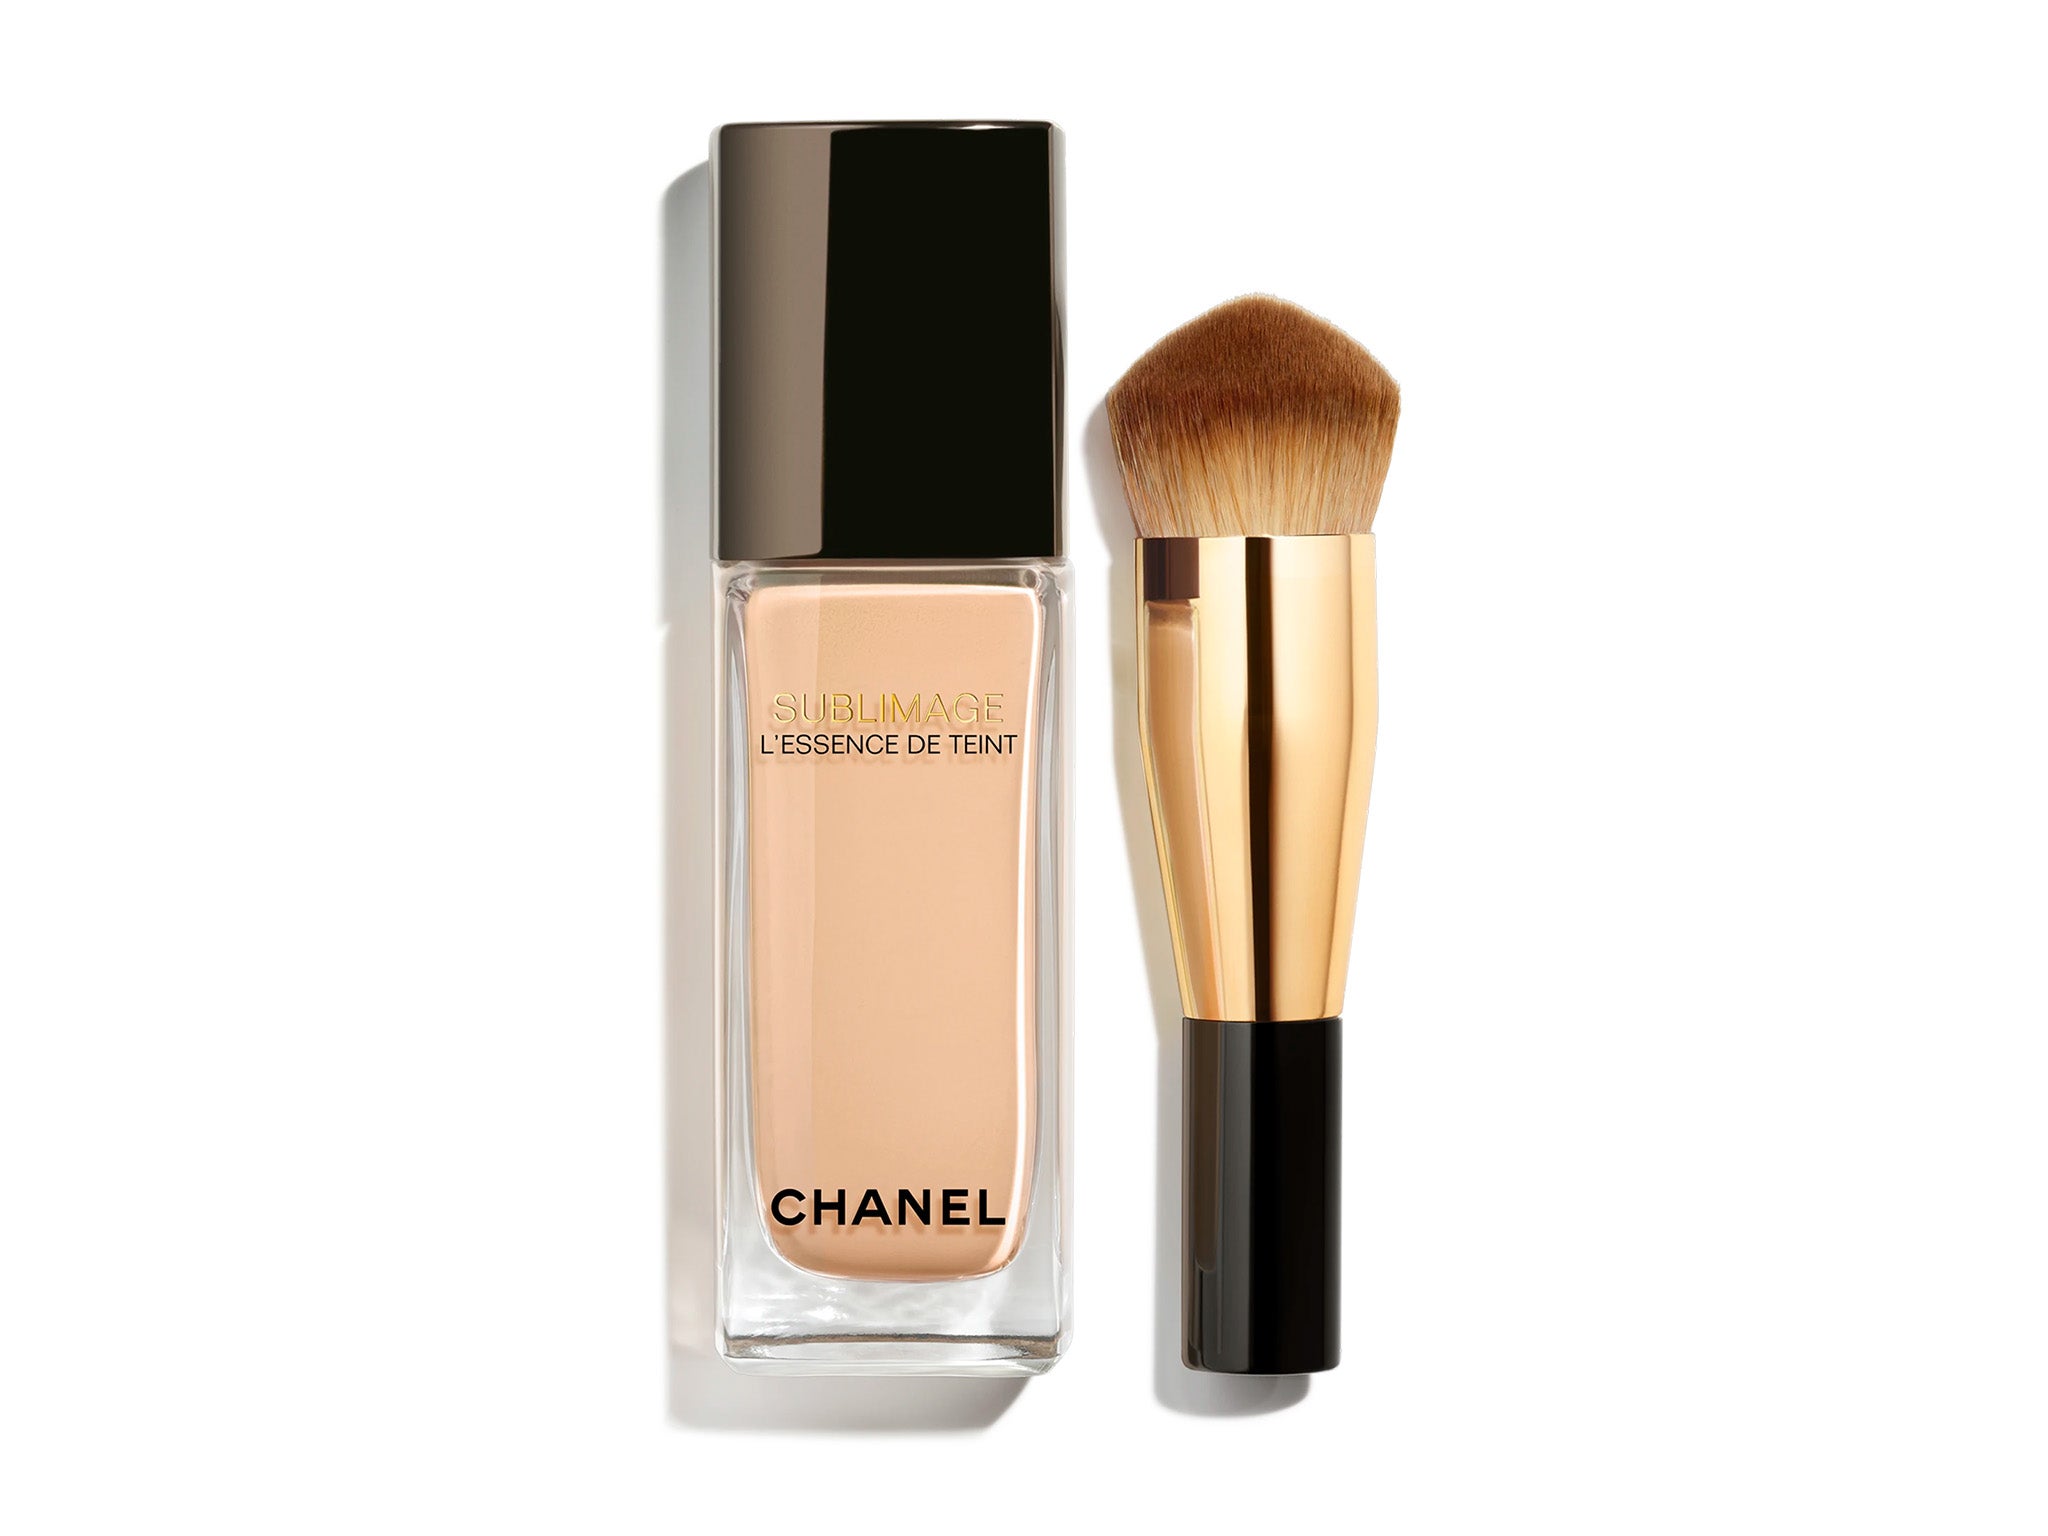 Chanel sublimage l'essence de teint ultimate radiance-generating serum foundation